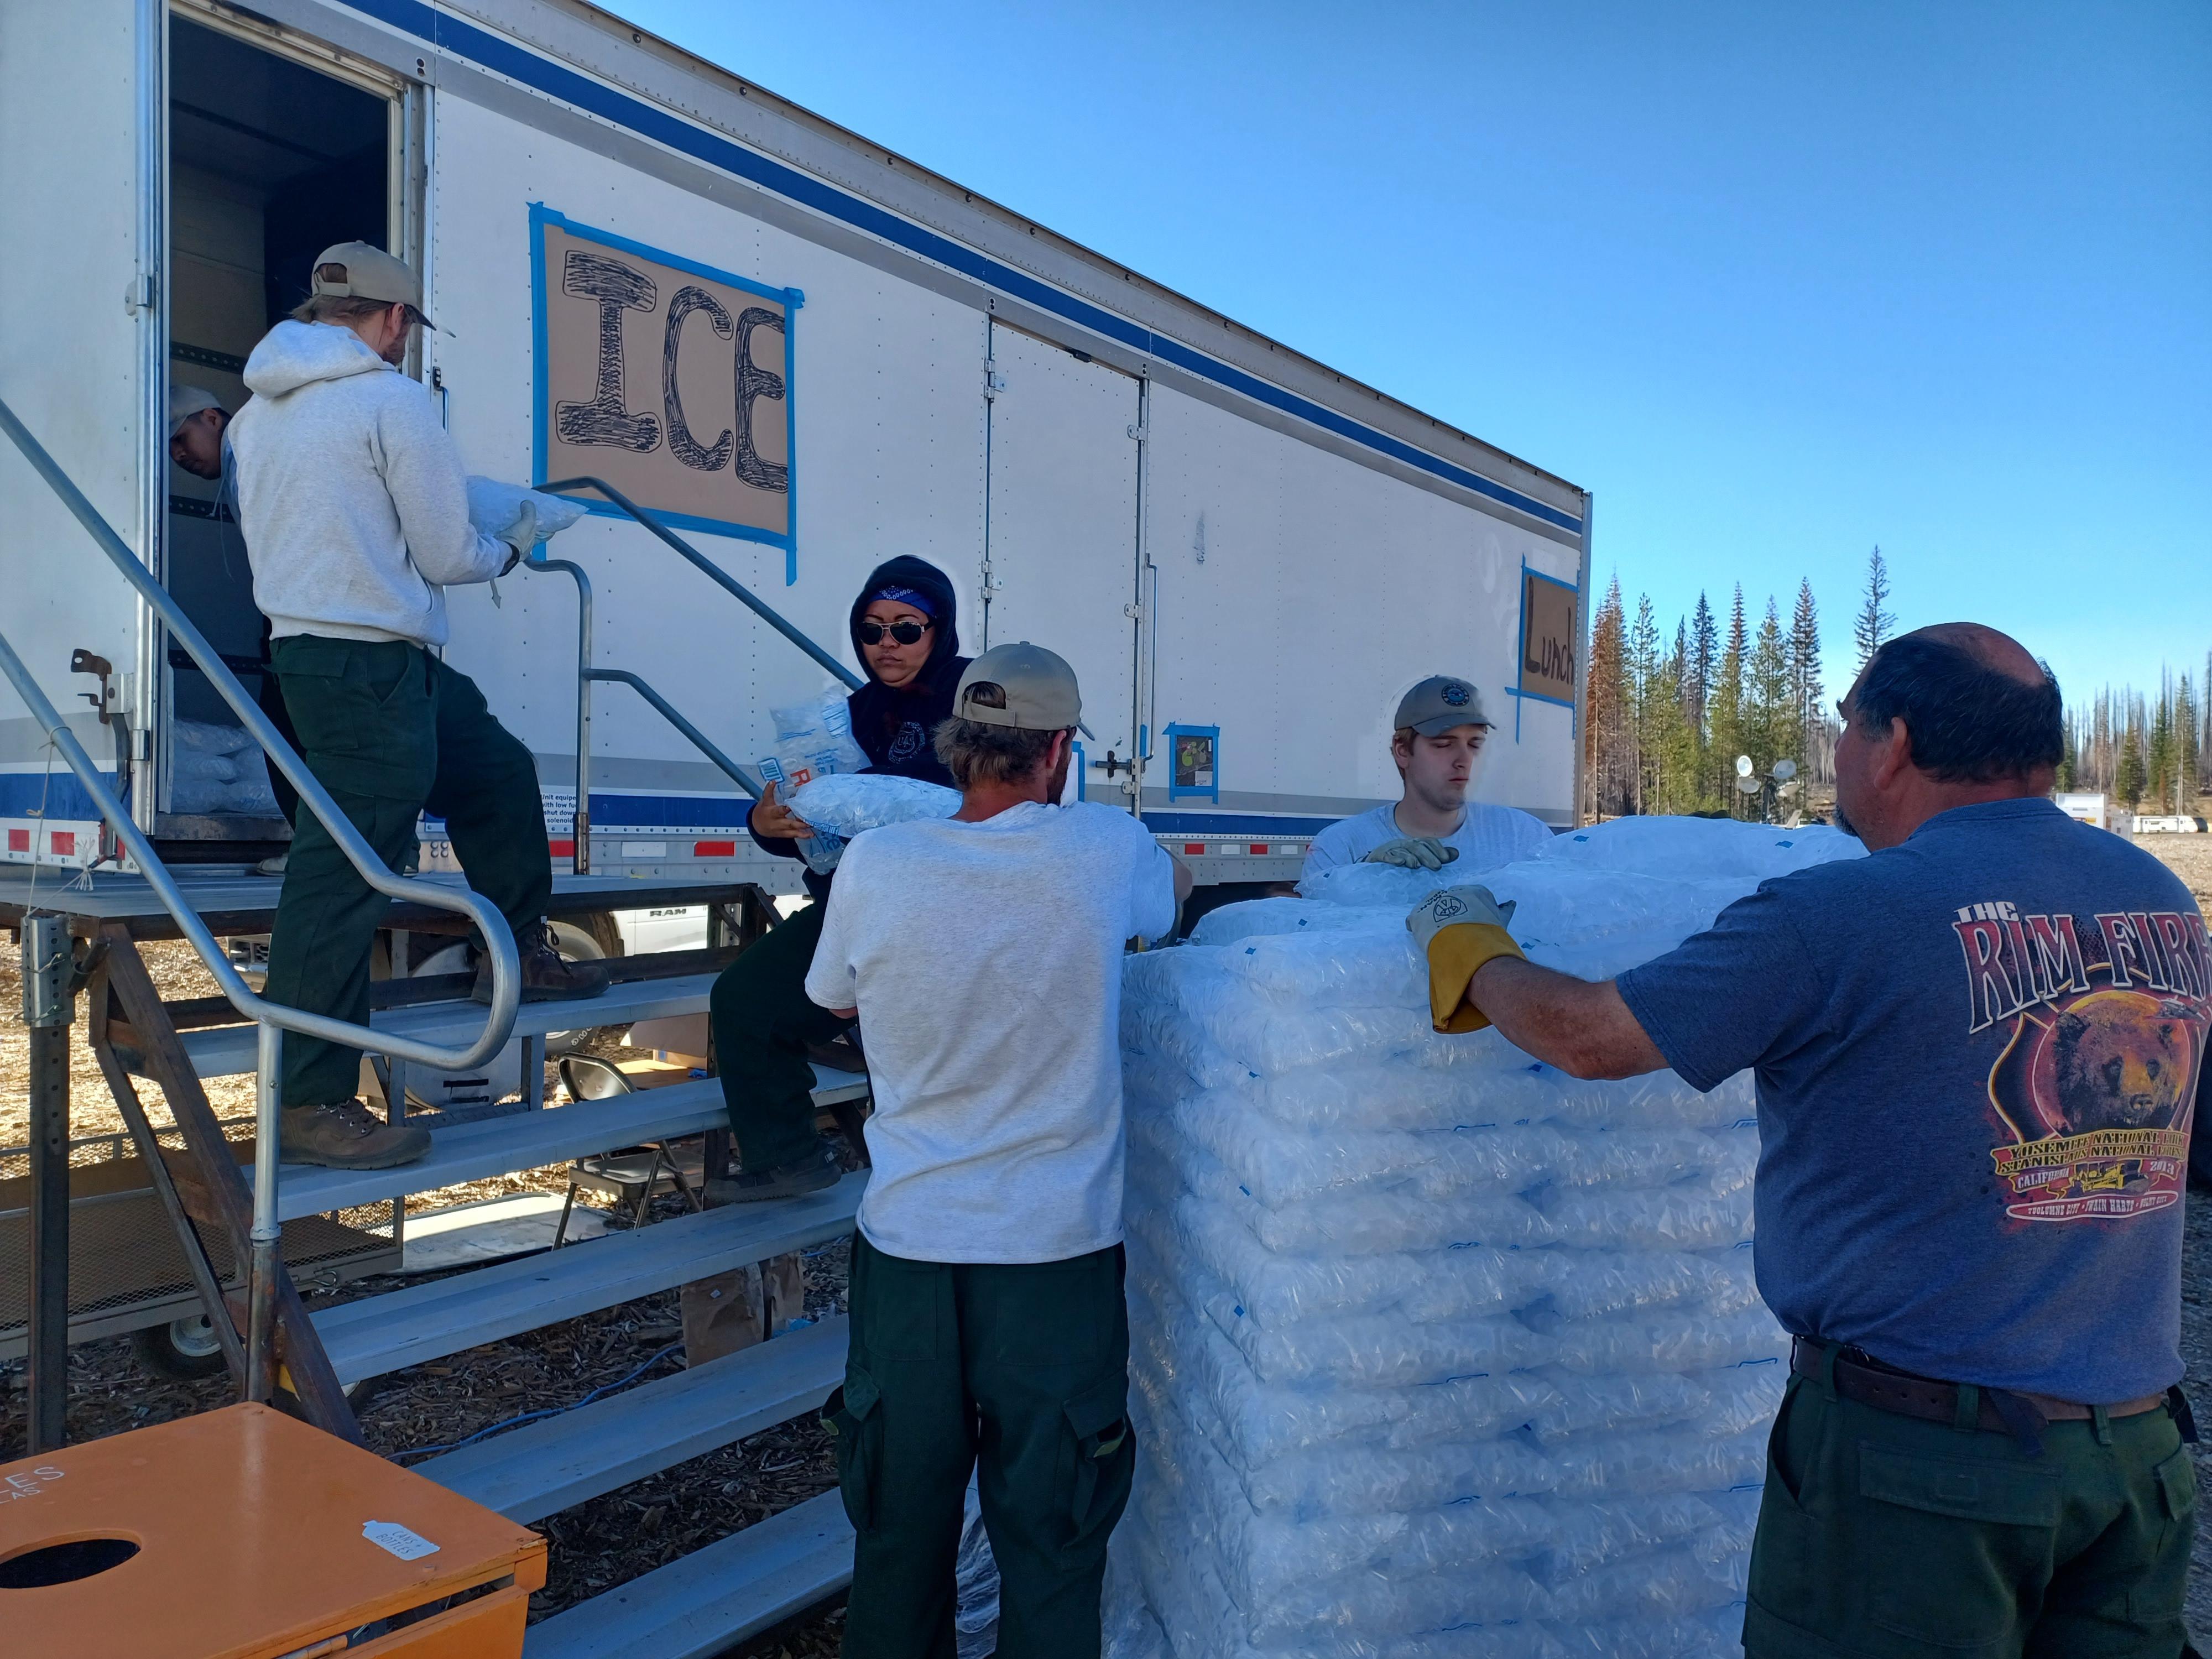 Angell Job Corps crew loading ice